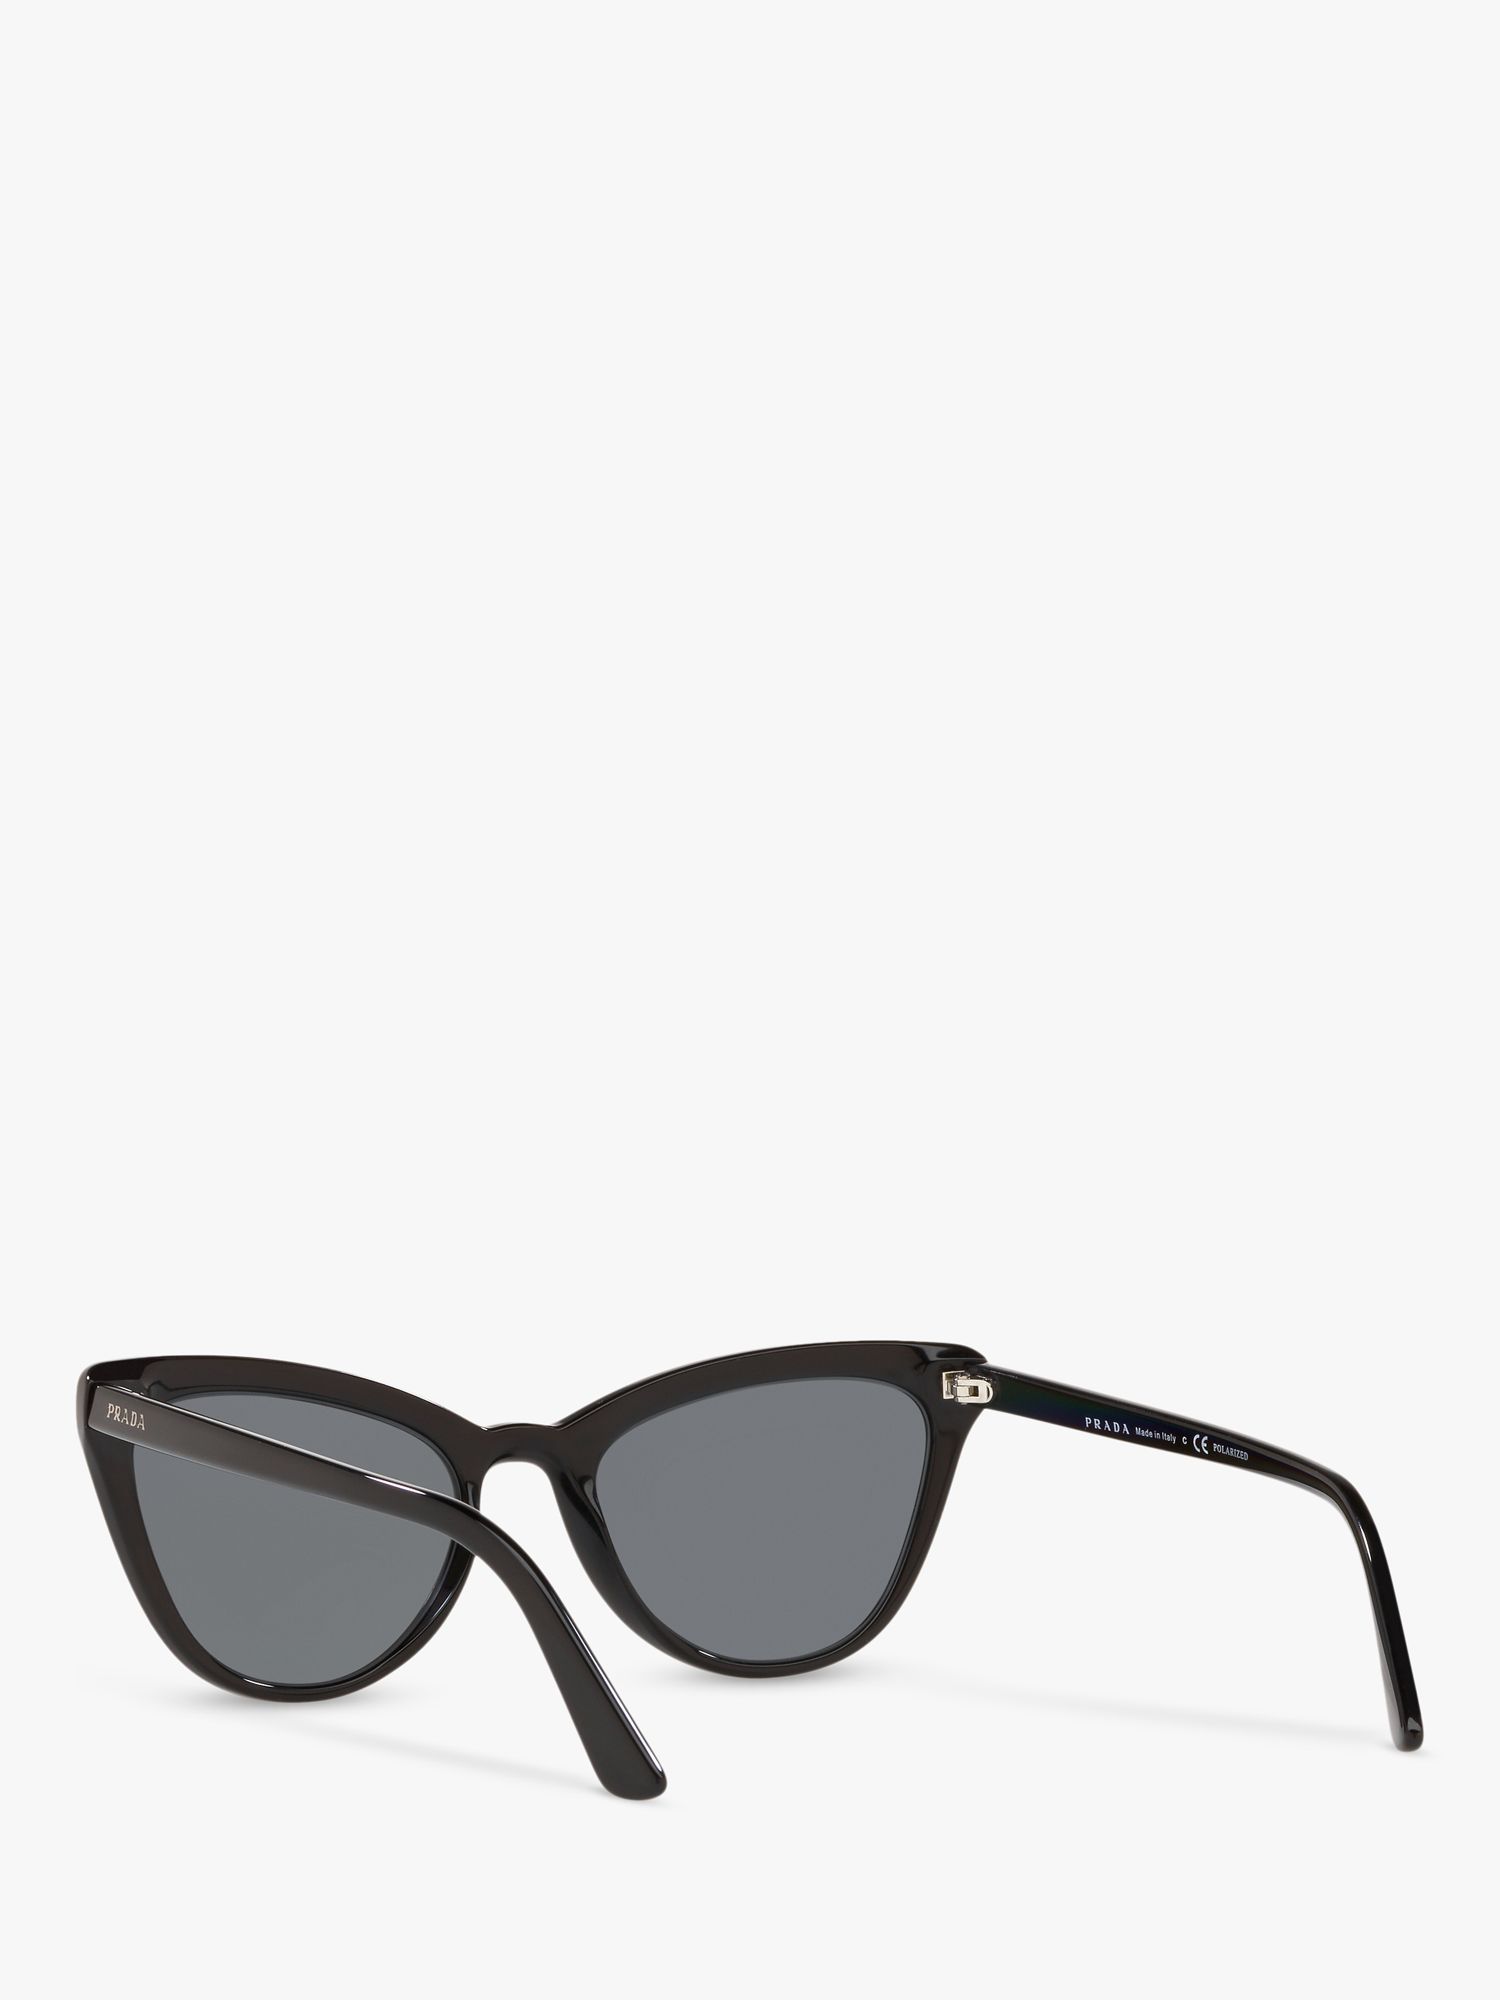 Prada PR 01VS Women's Polarised Cat's Eye Sunglasses, Black/Grey at John Lewis & Partners